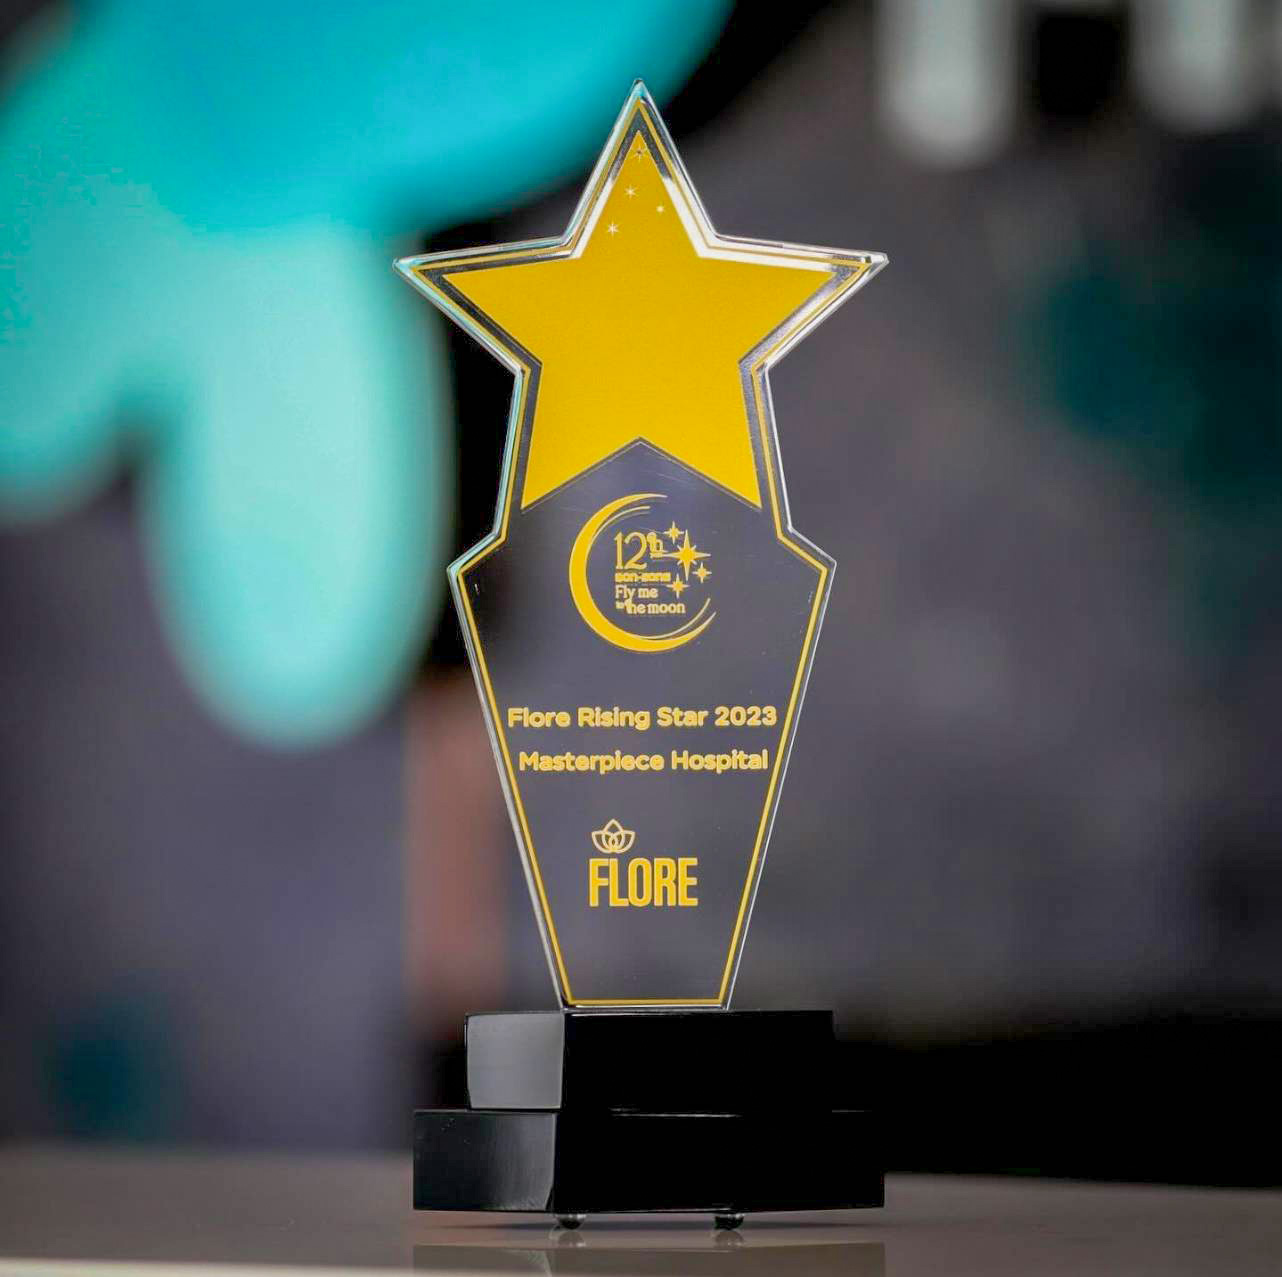 Flore Rising Star Hospital Award 2023